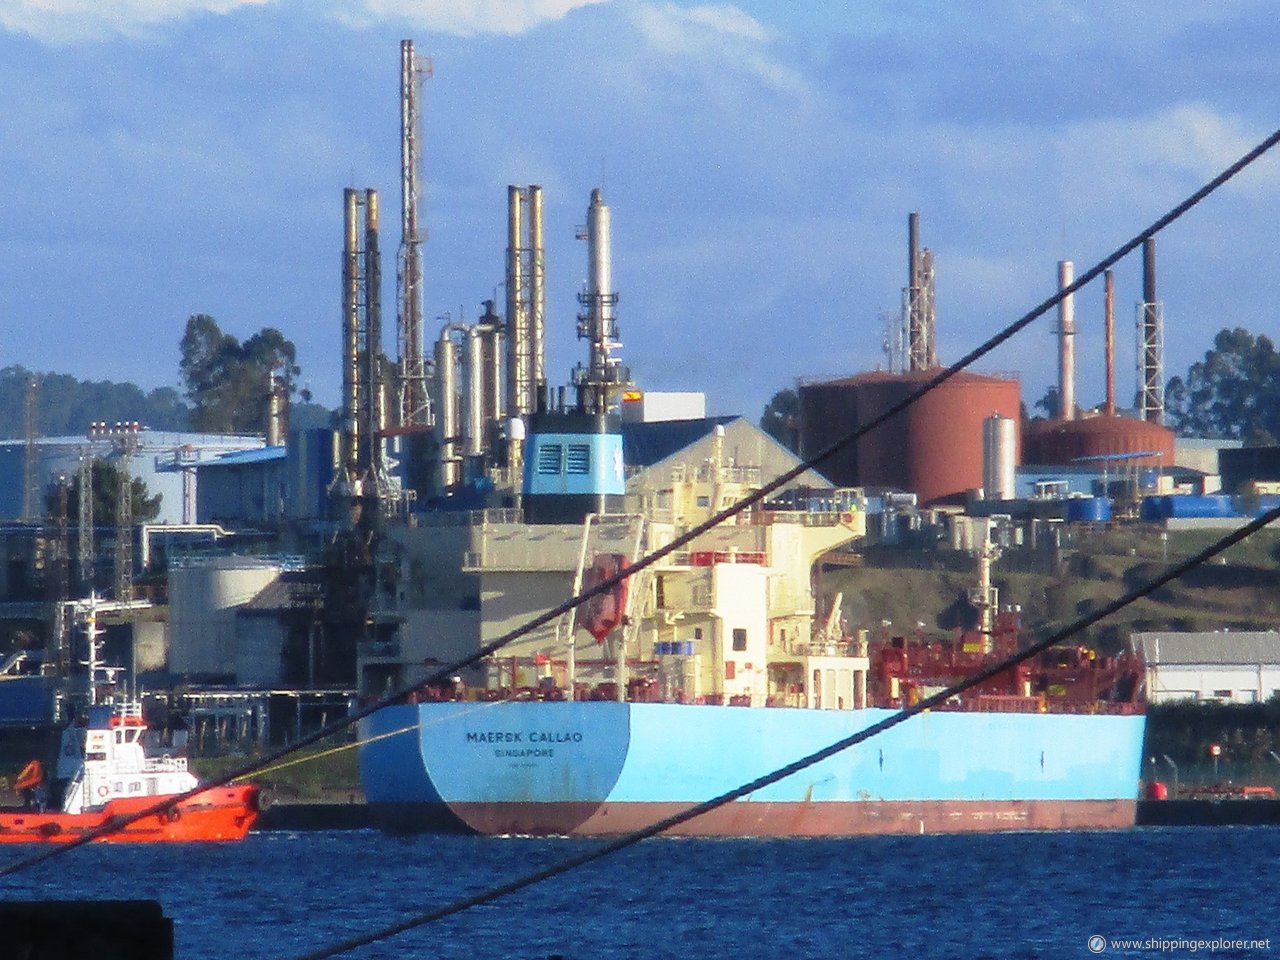 Maersk Callao